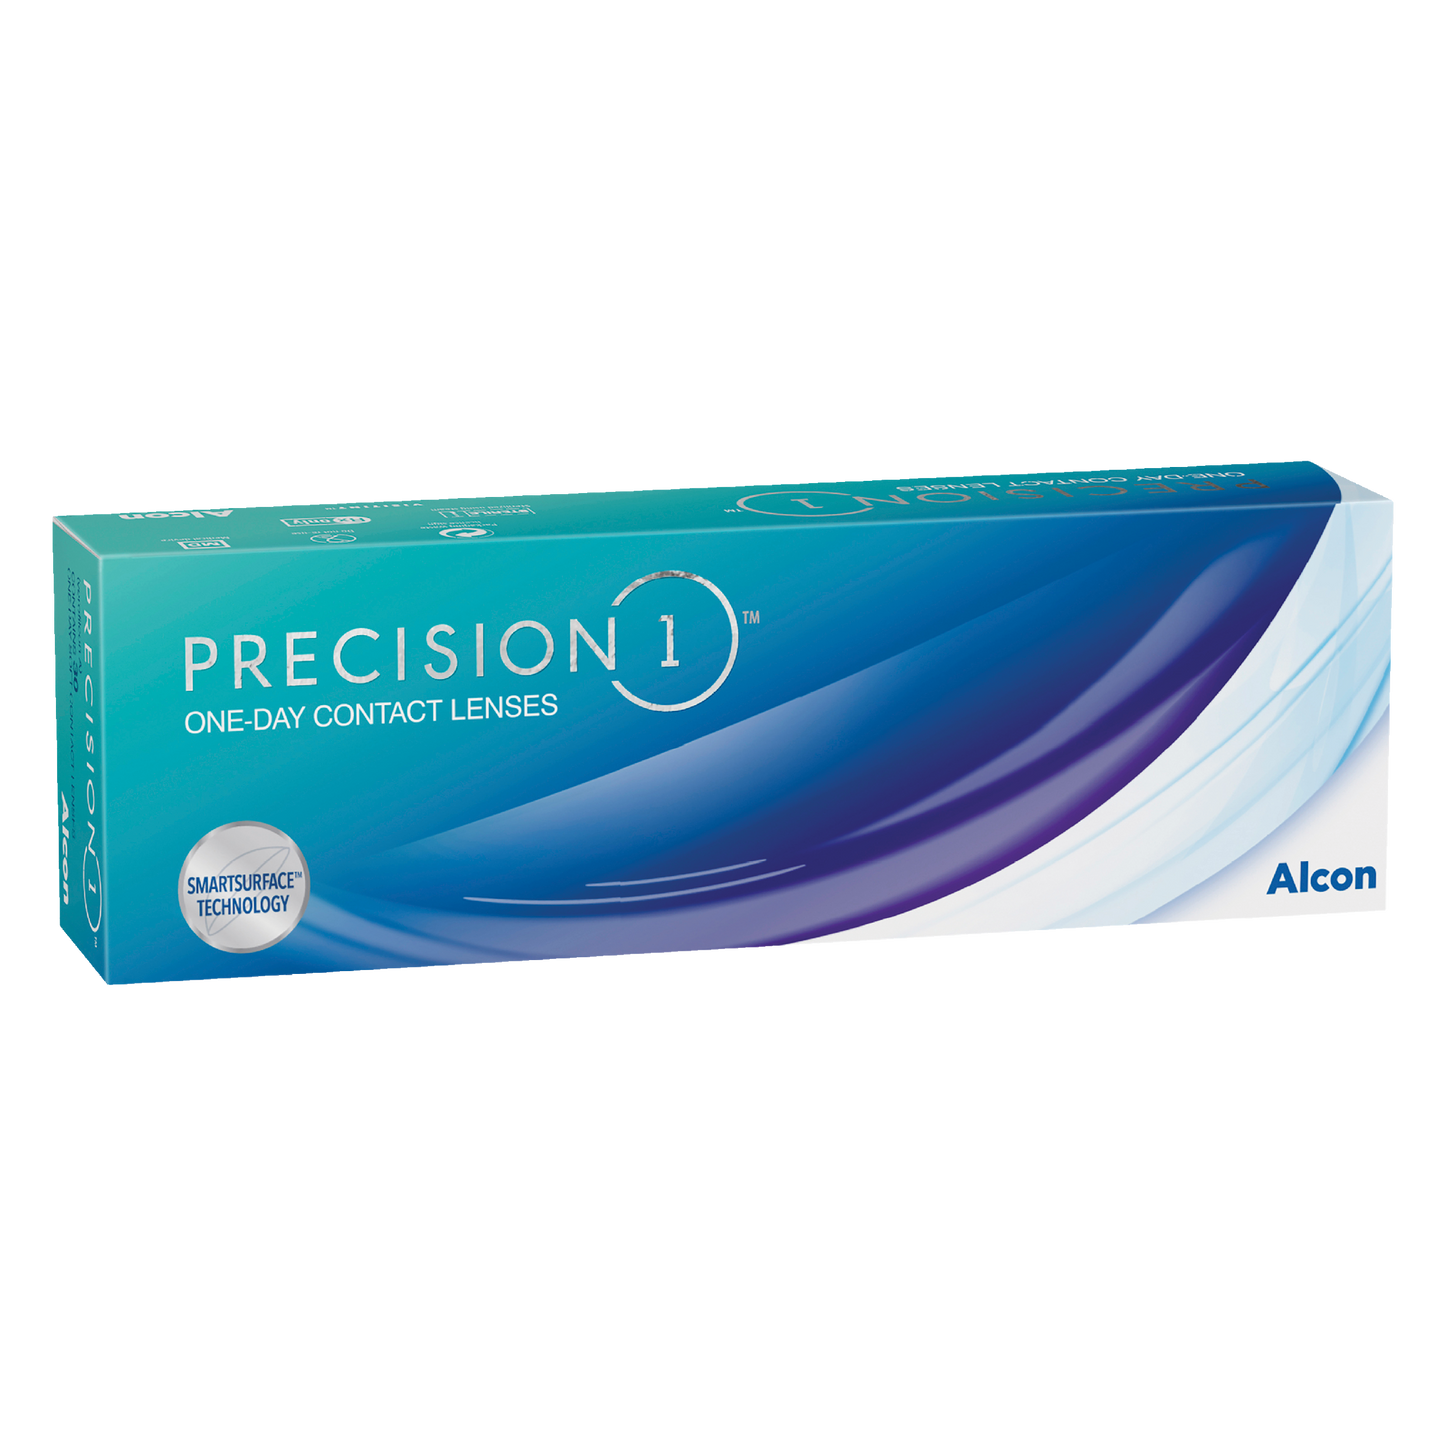 Box of Alcon Precision1 contact lenses